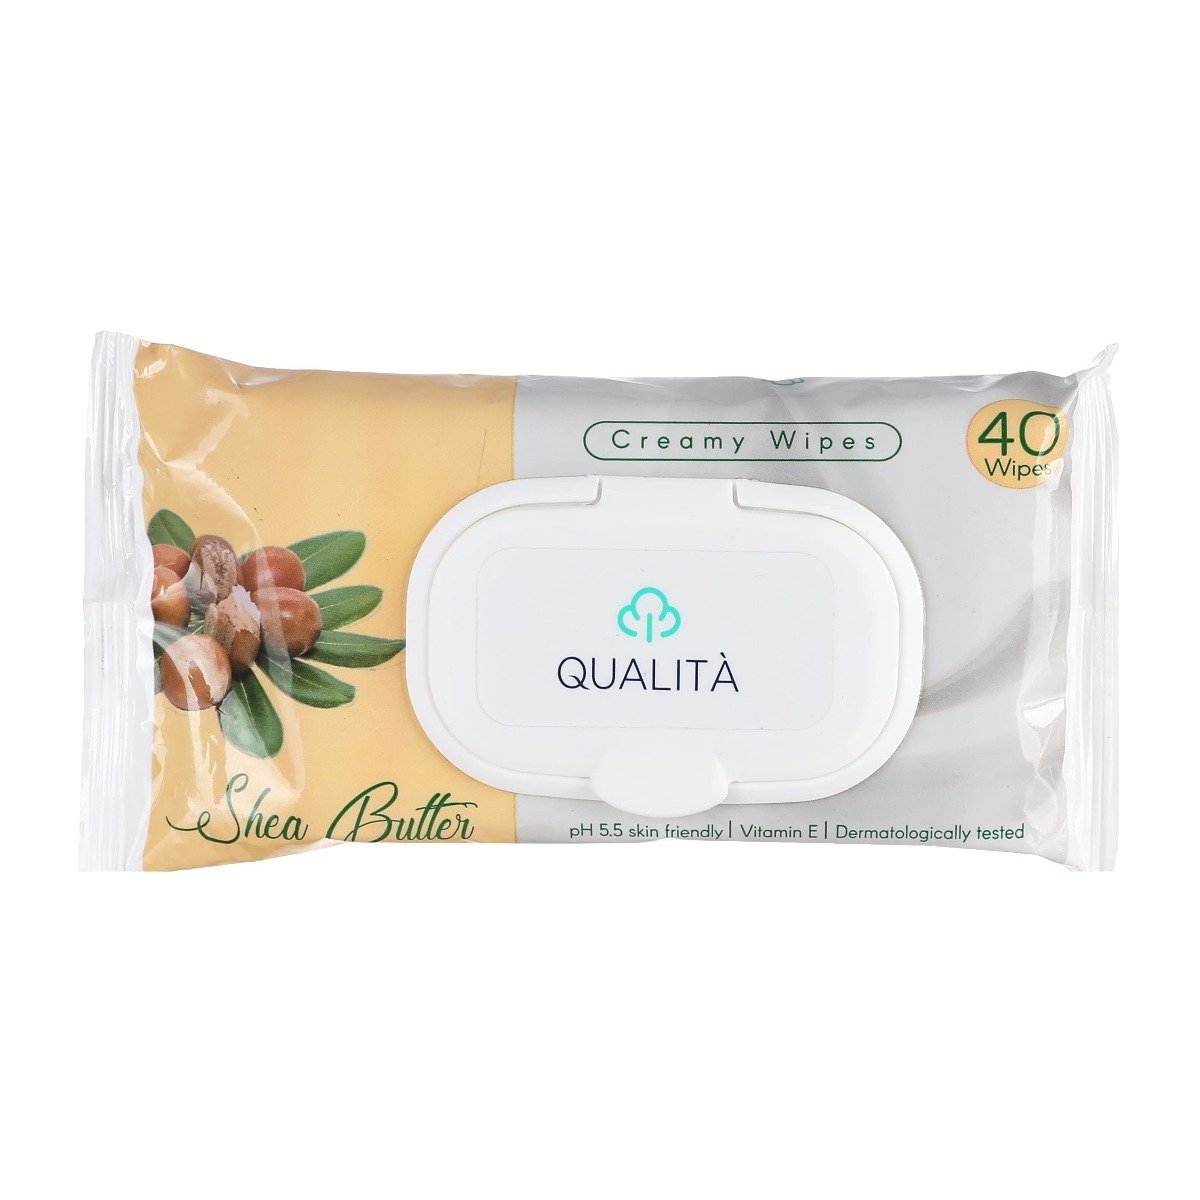 Qualita Shea Butter Creamy Wipes - 40 Wipes - Bloom Pharmacy